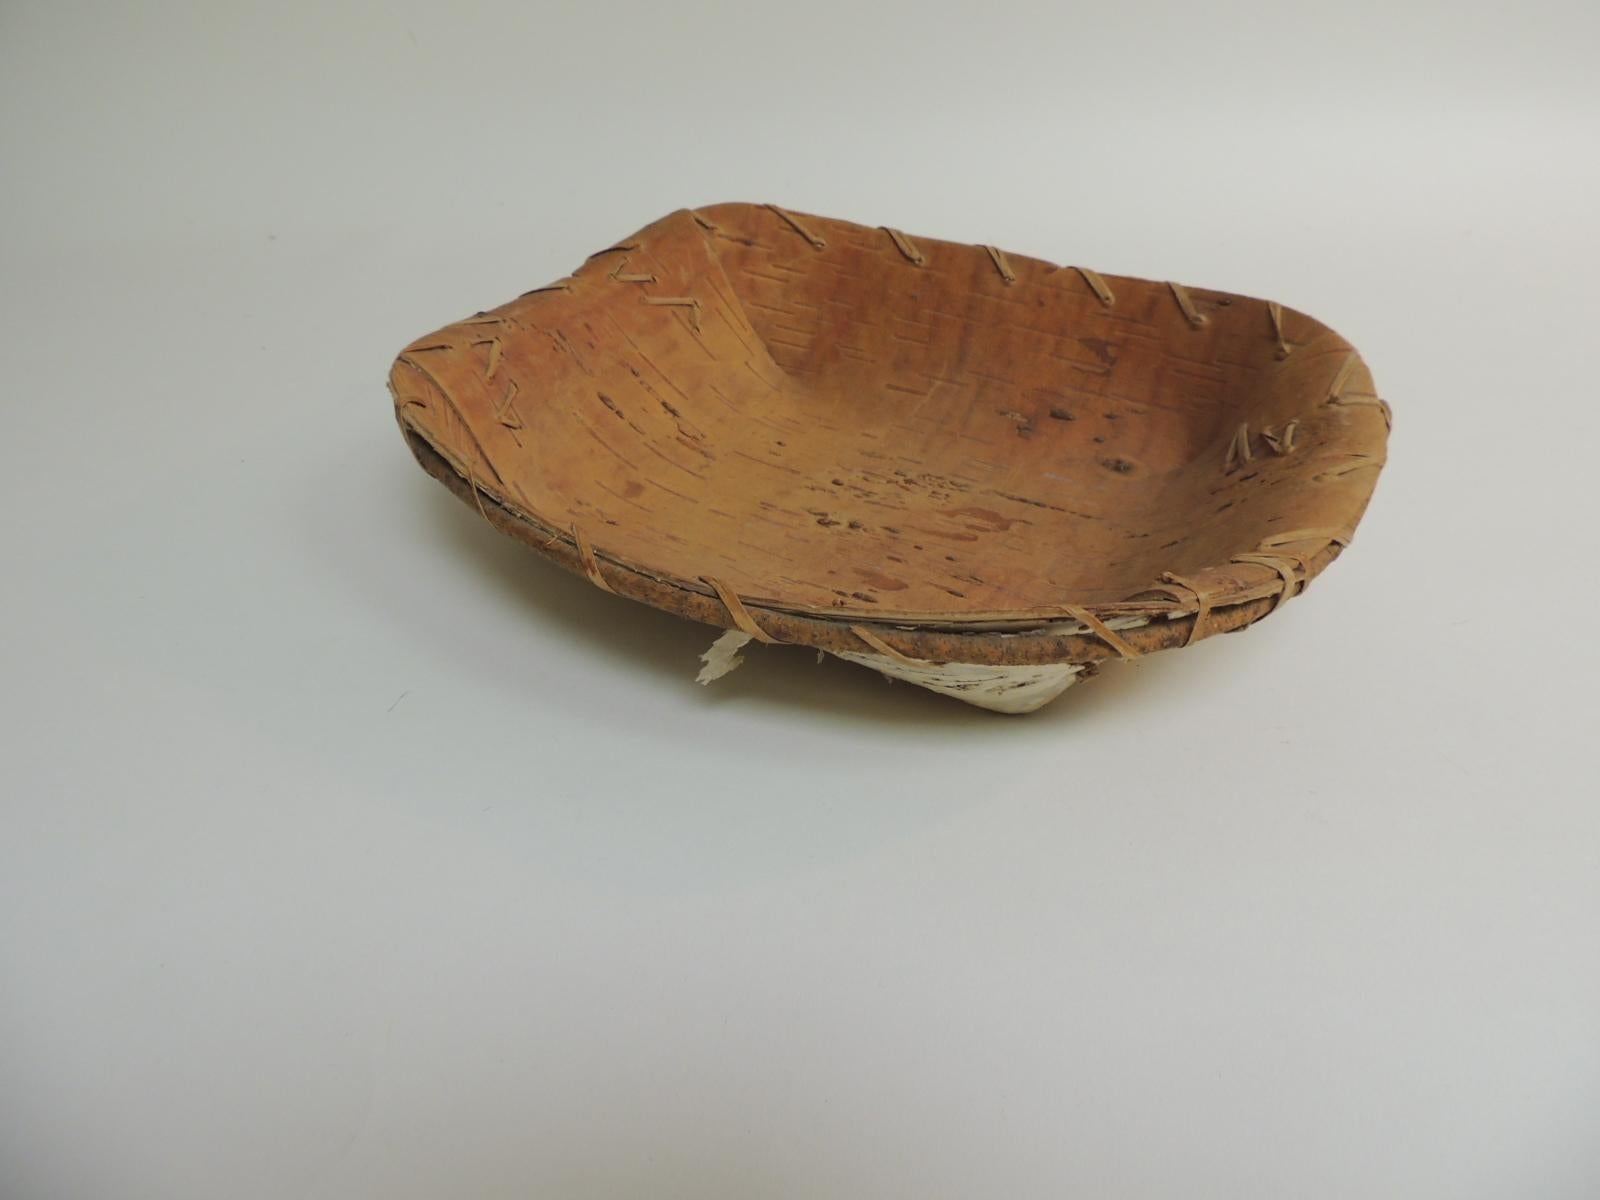 Rustic Vintage Tree Bark Serving Decorative Artisanal Bowl